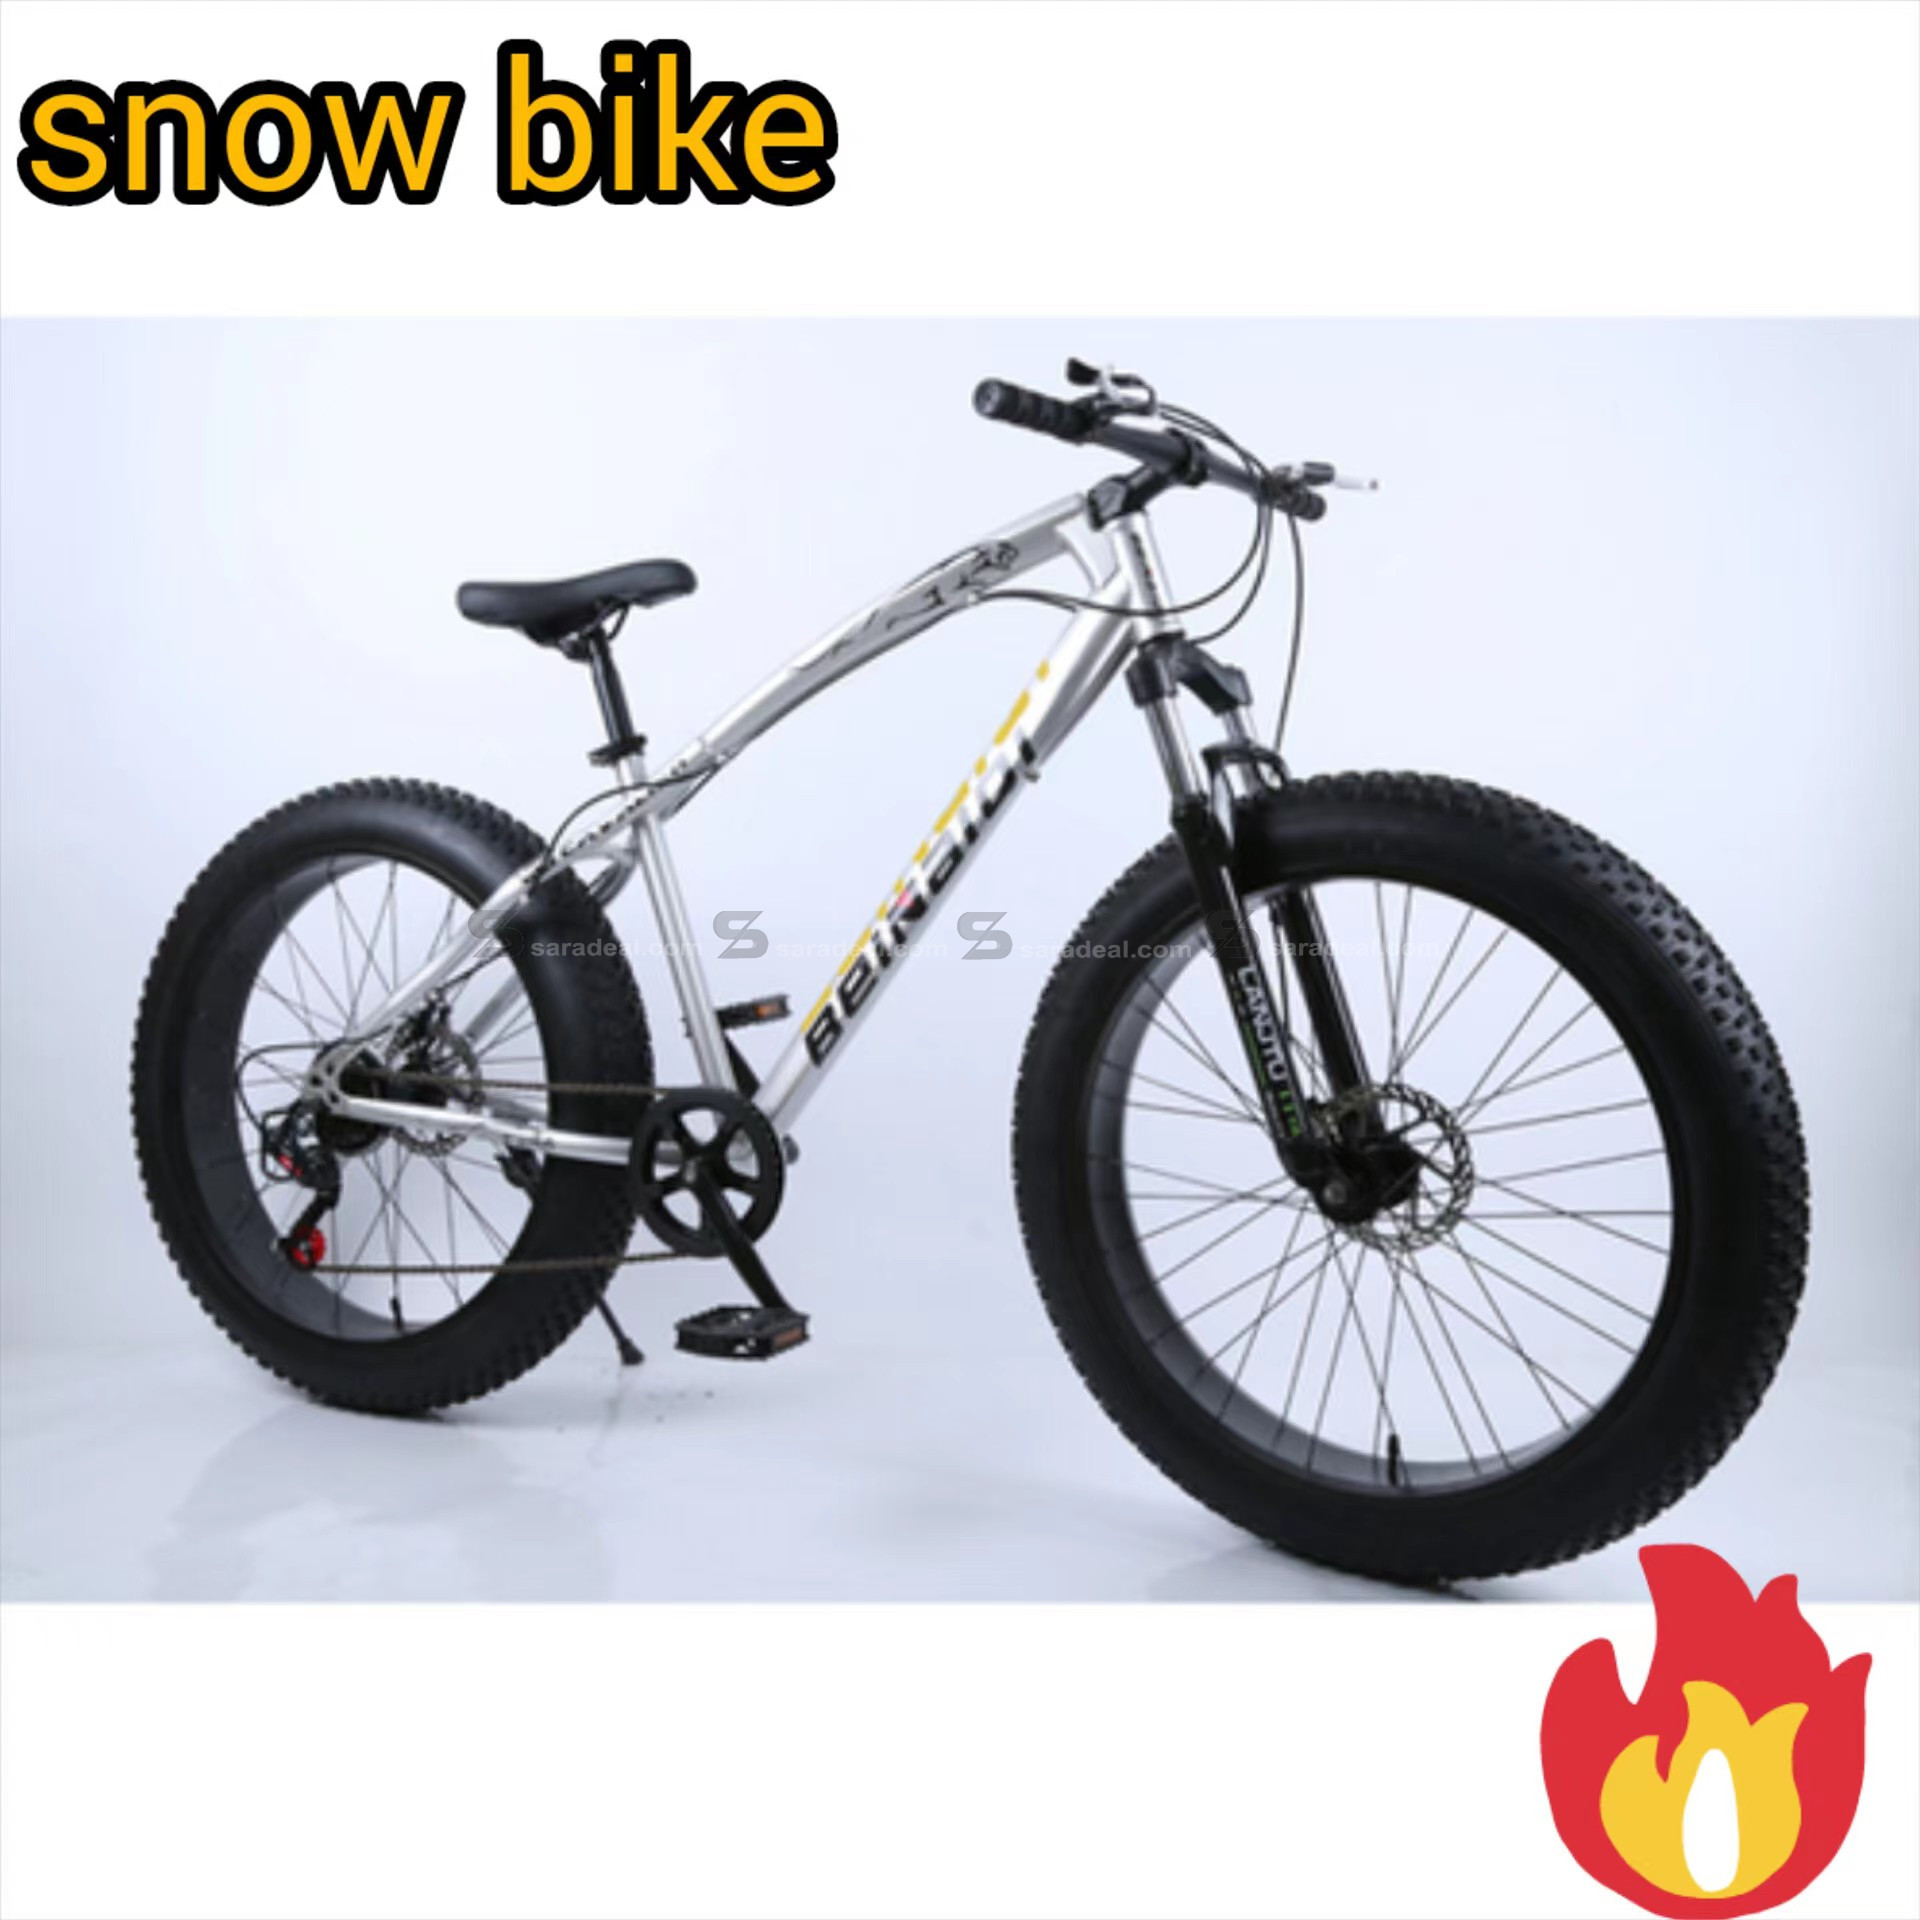 snow bike provide sample